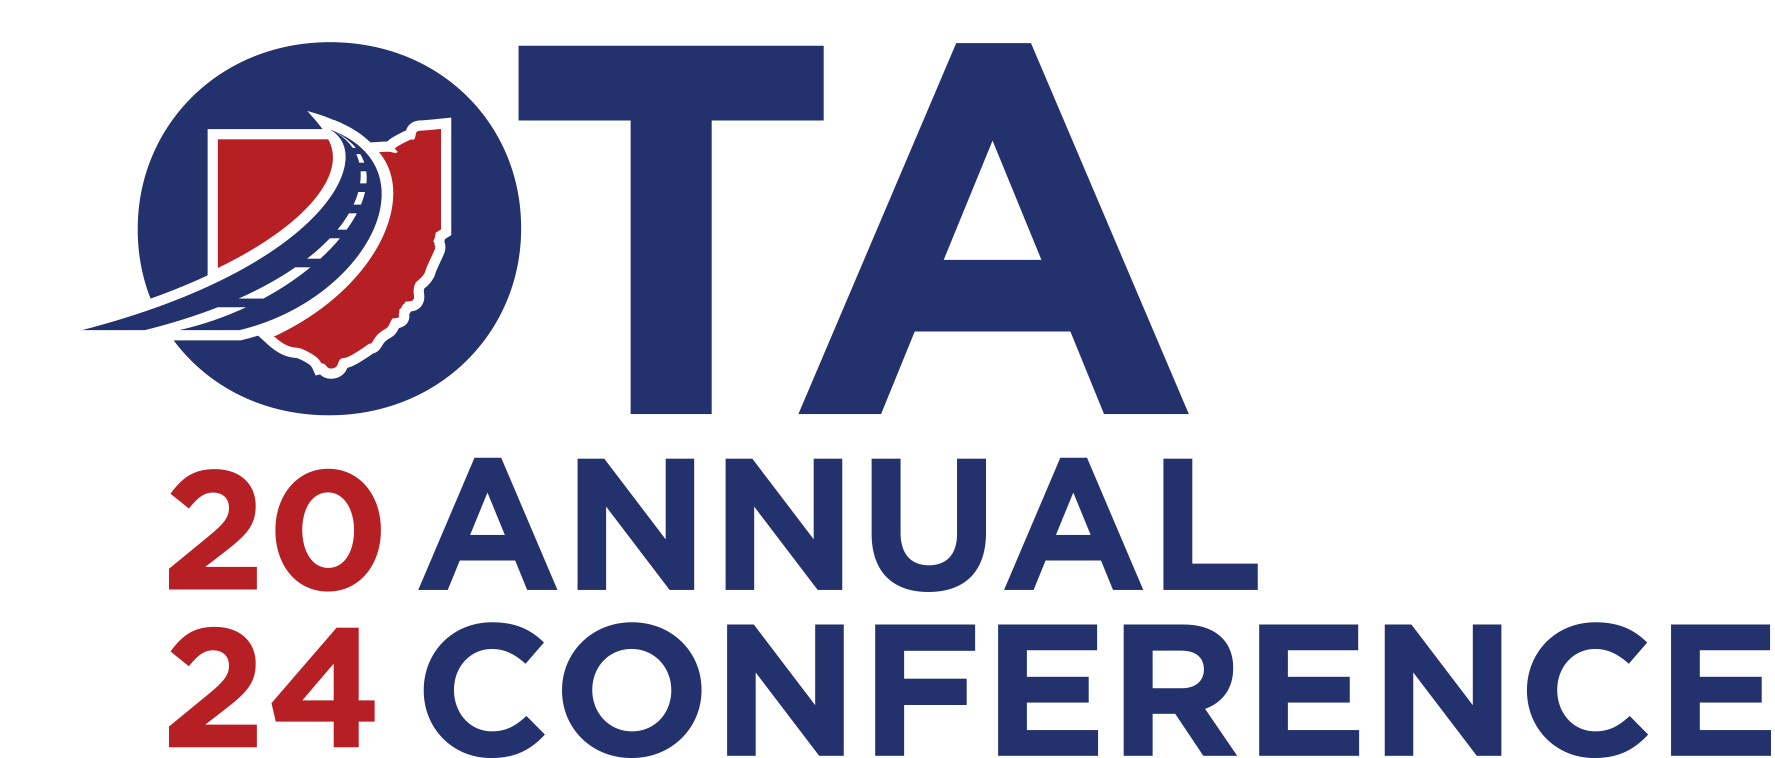 ota_conference_logo